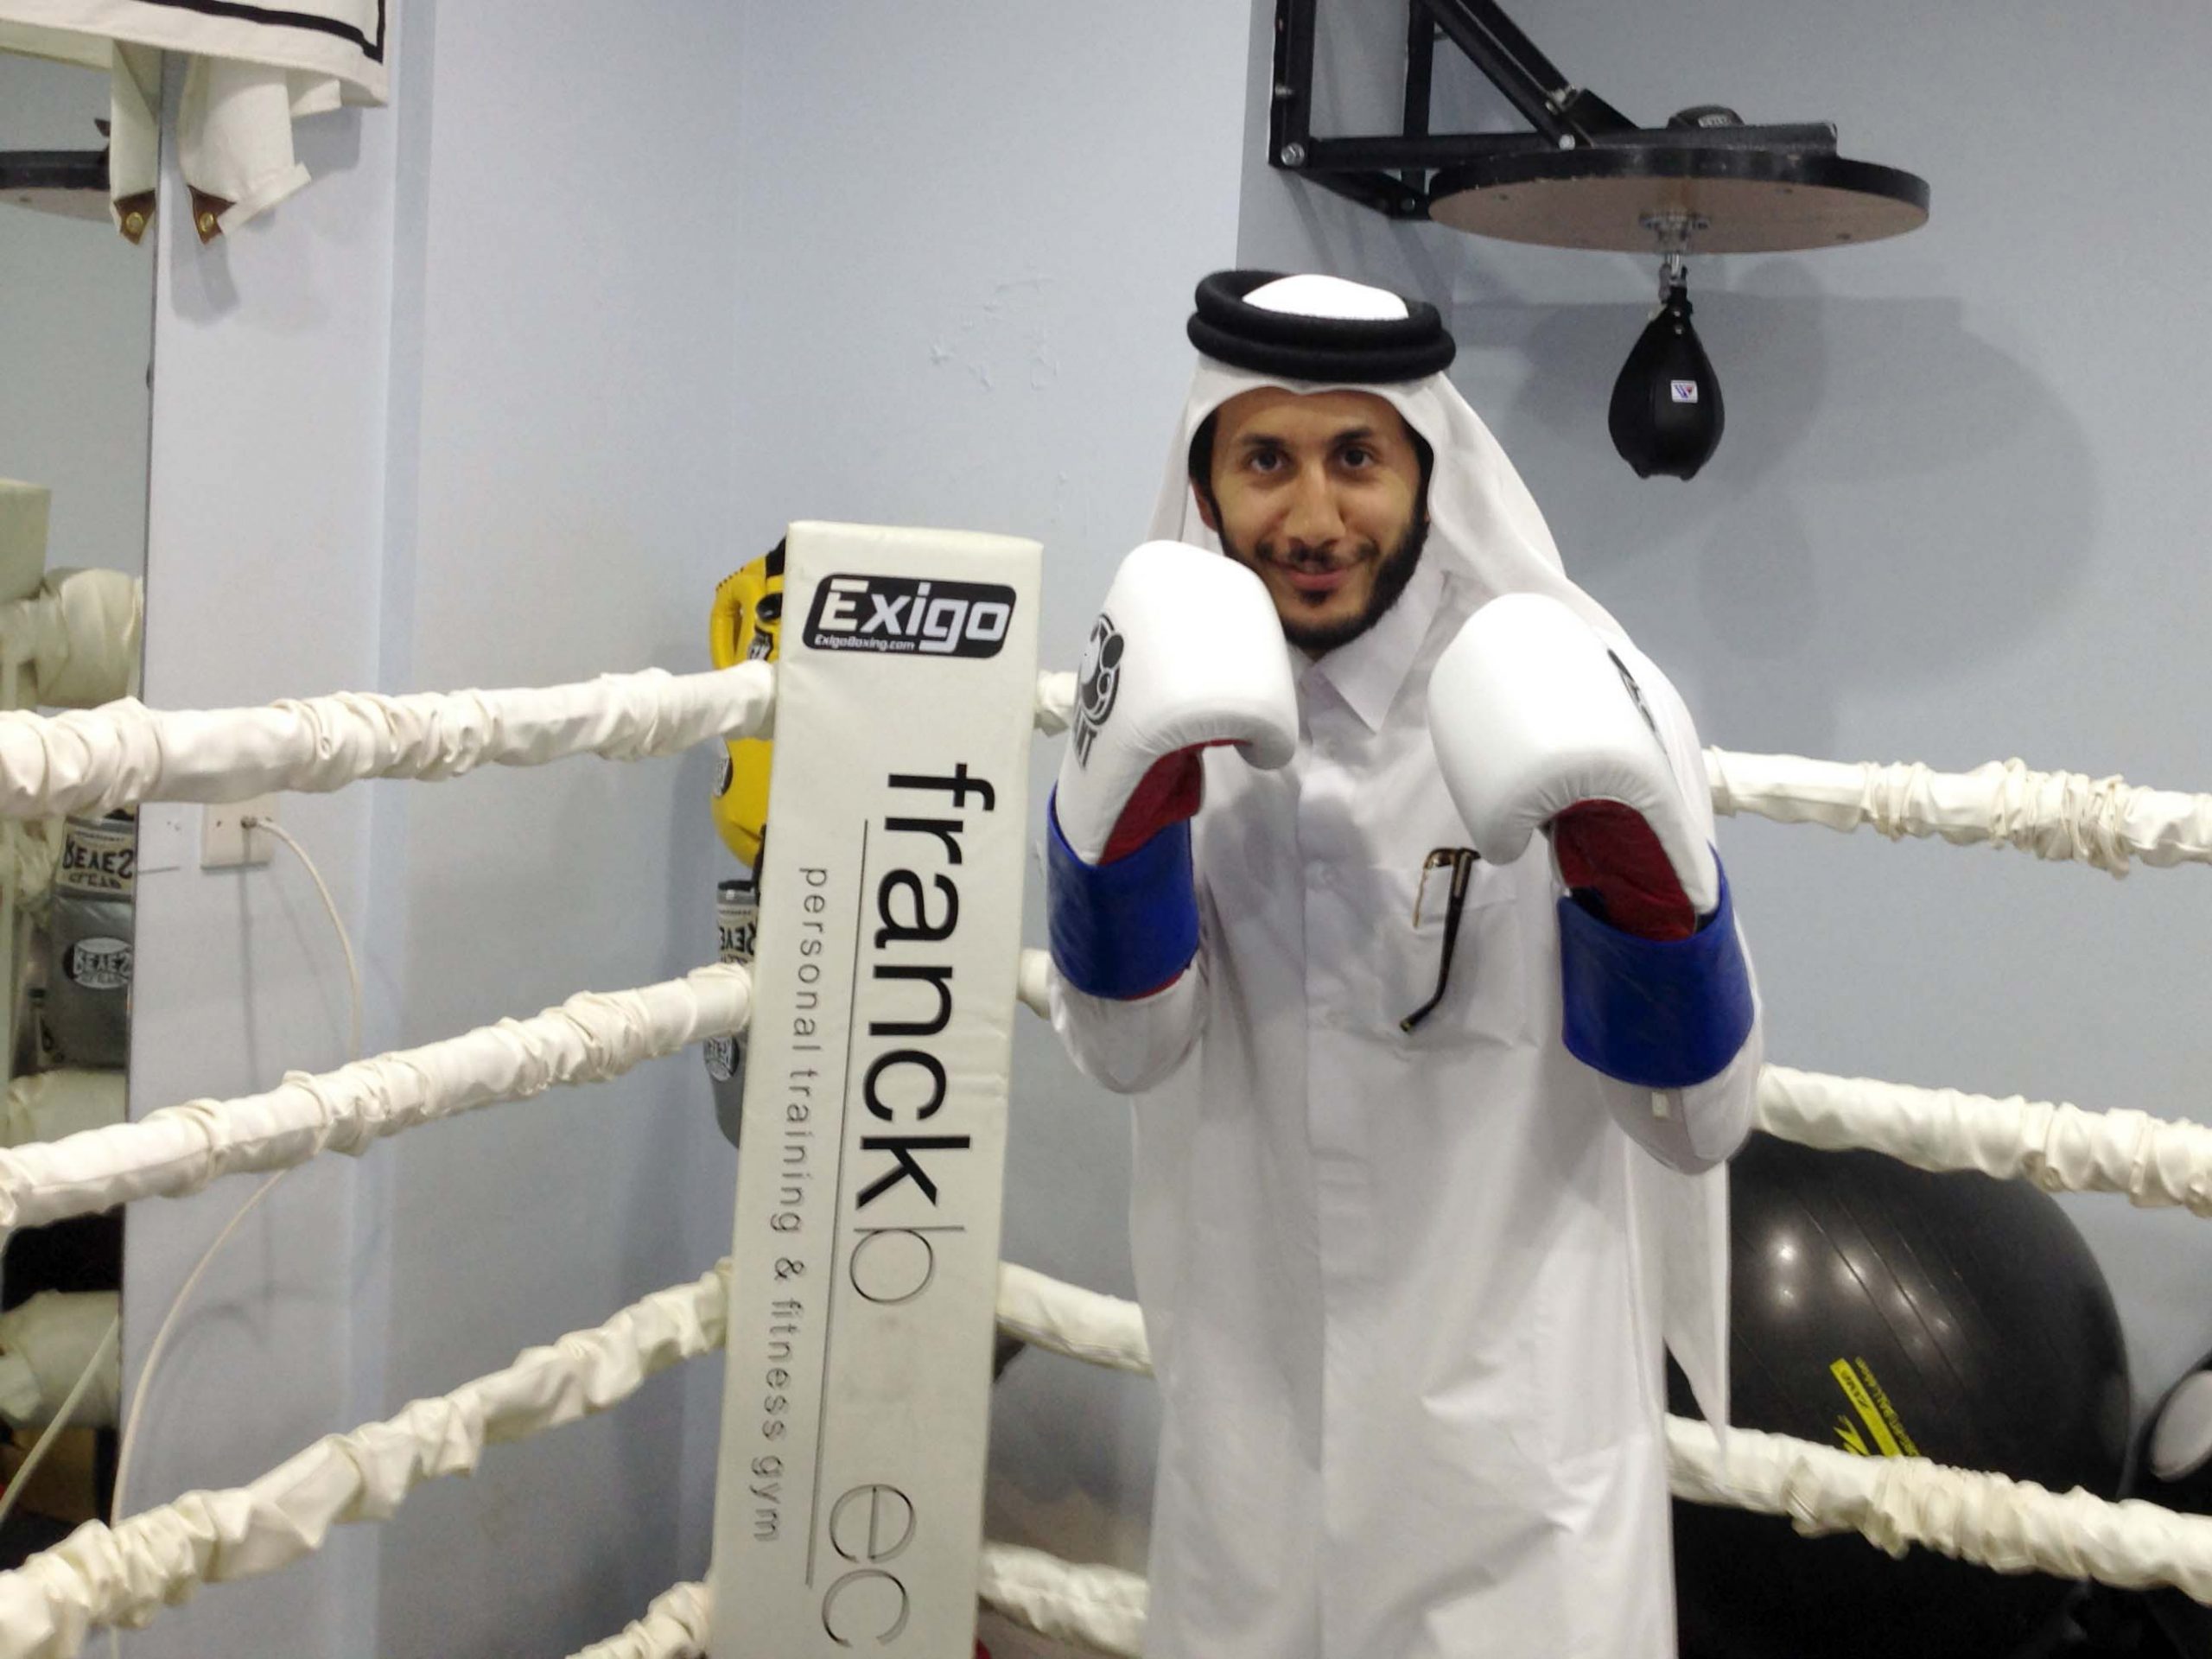 Qatar's pro boxer Sheikh Fahad named “Save the Dream” Ambassador